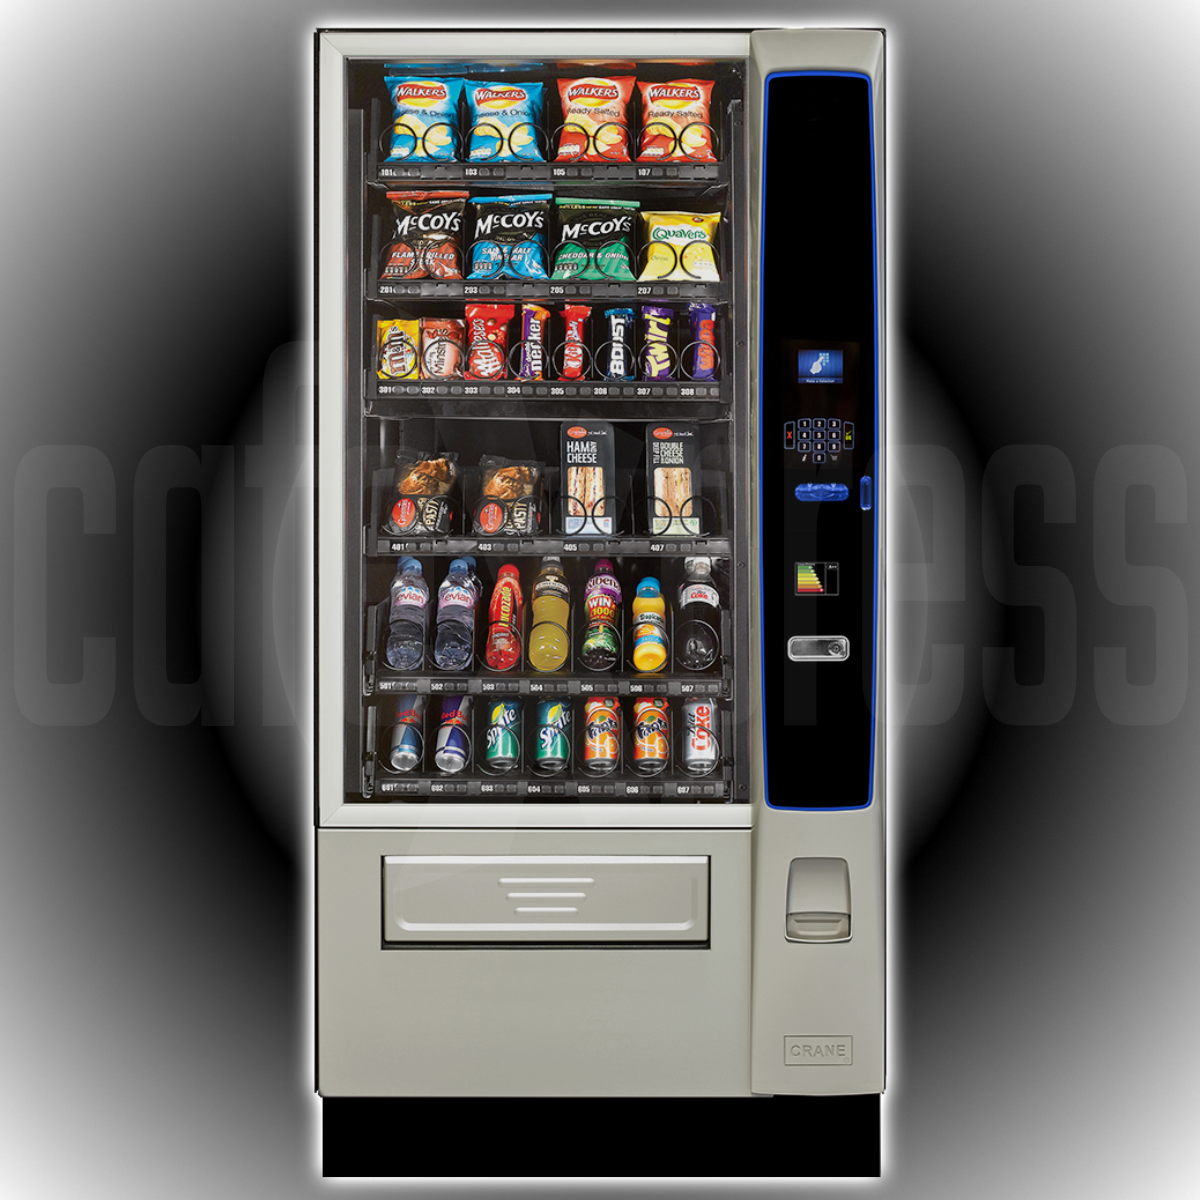 Merchant 4 Media2 R290 Vending Machine